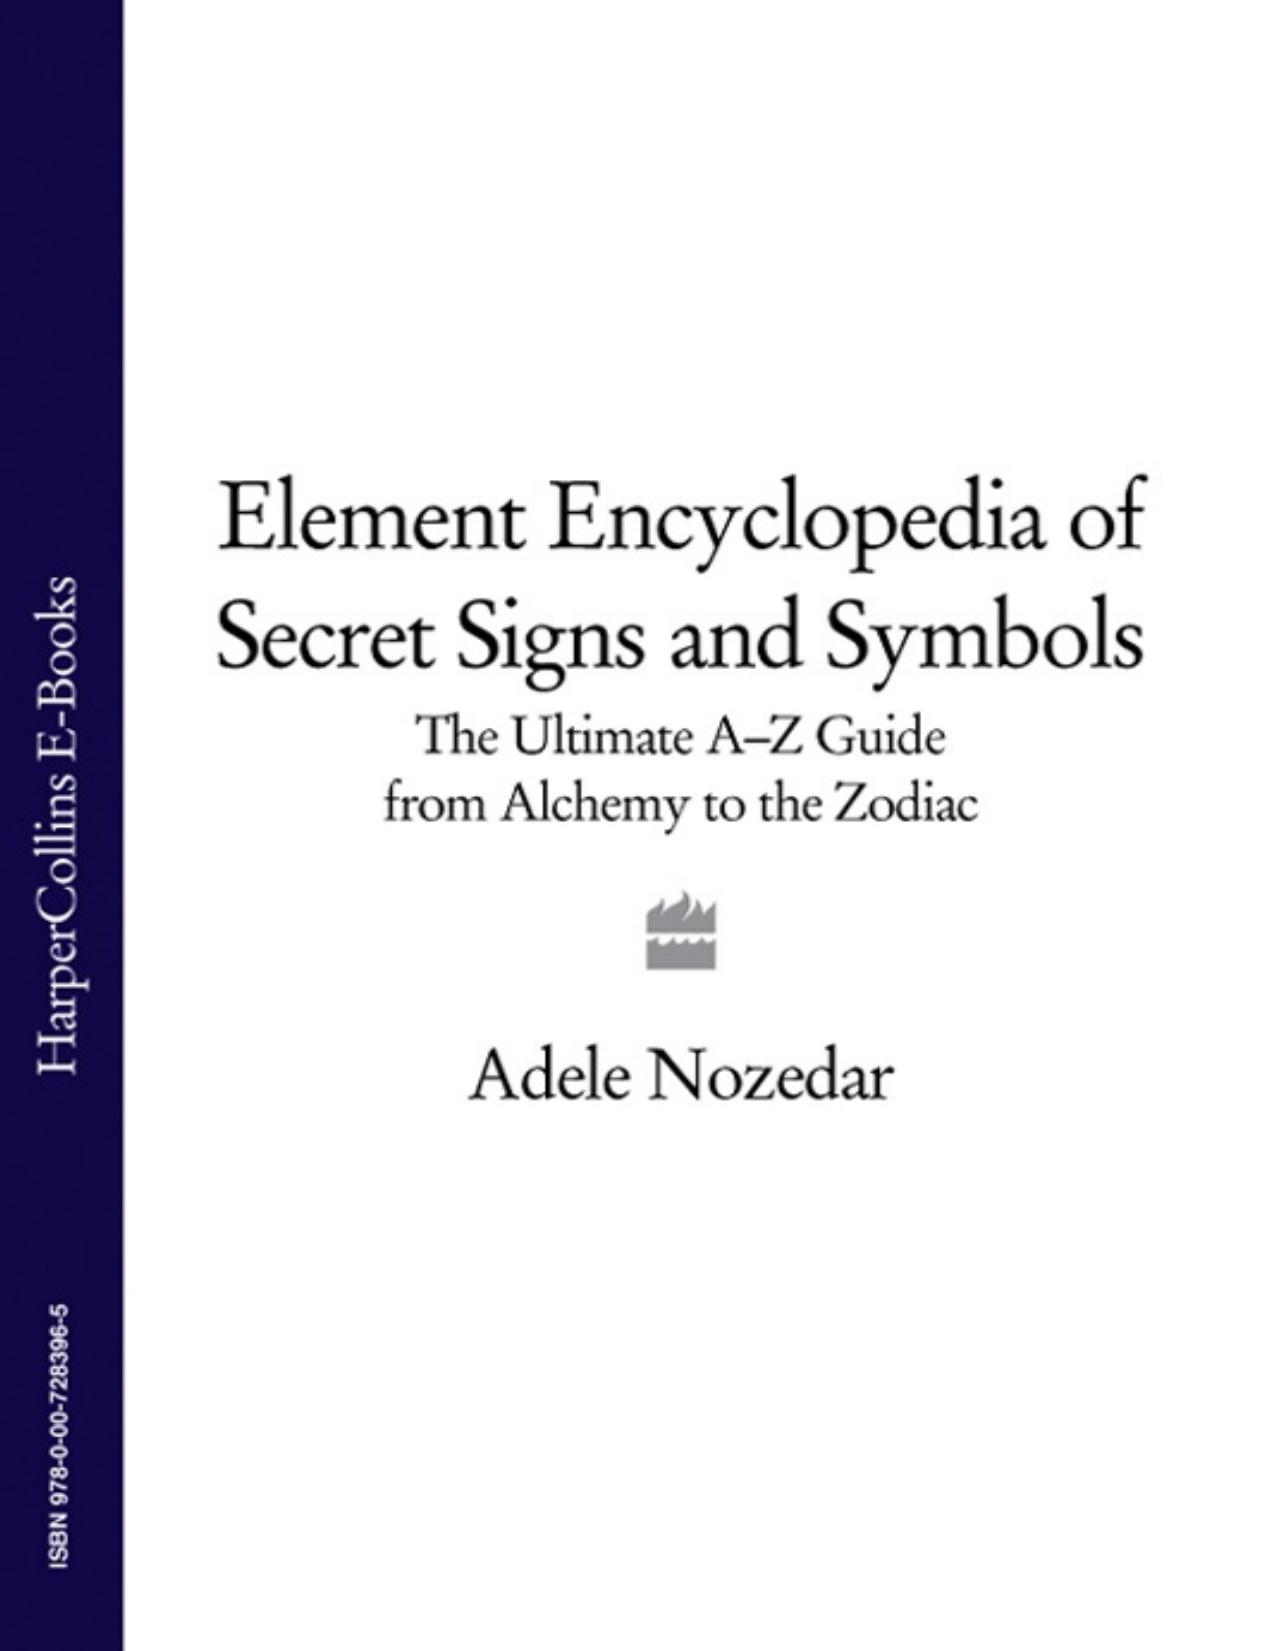 Element Encyclopedia of Secret Signs and Symbols by Adele Nozedar